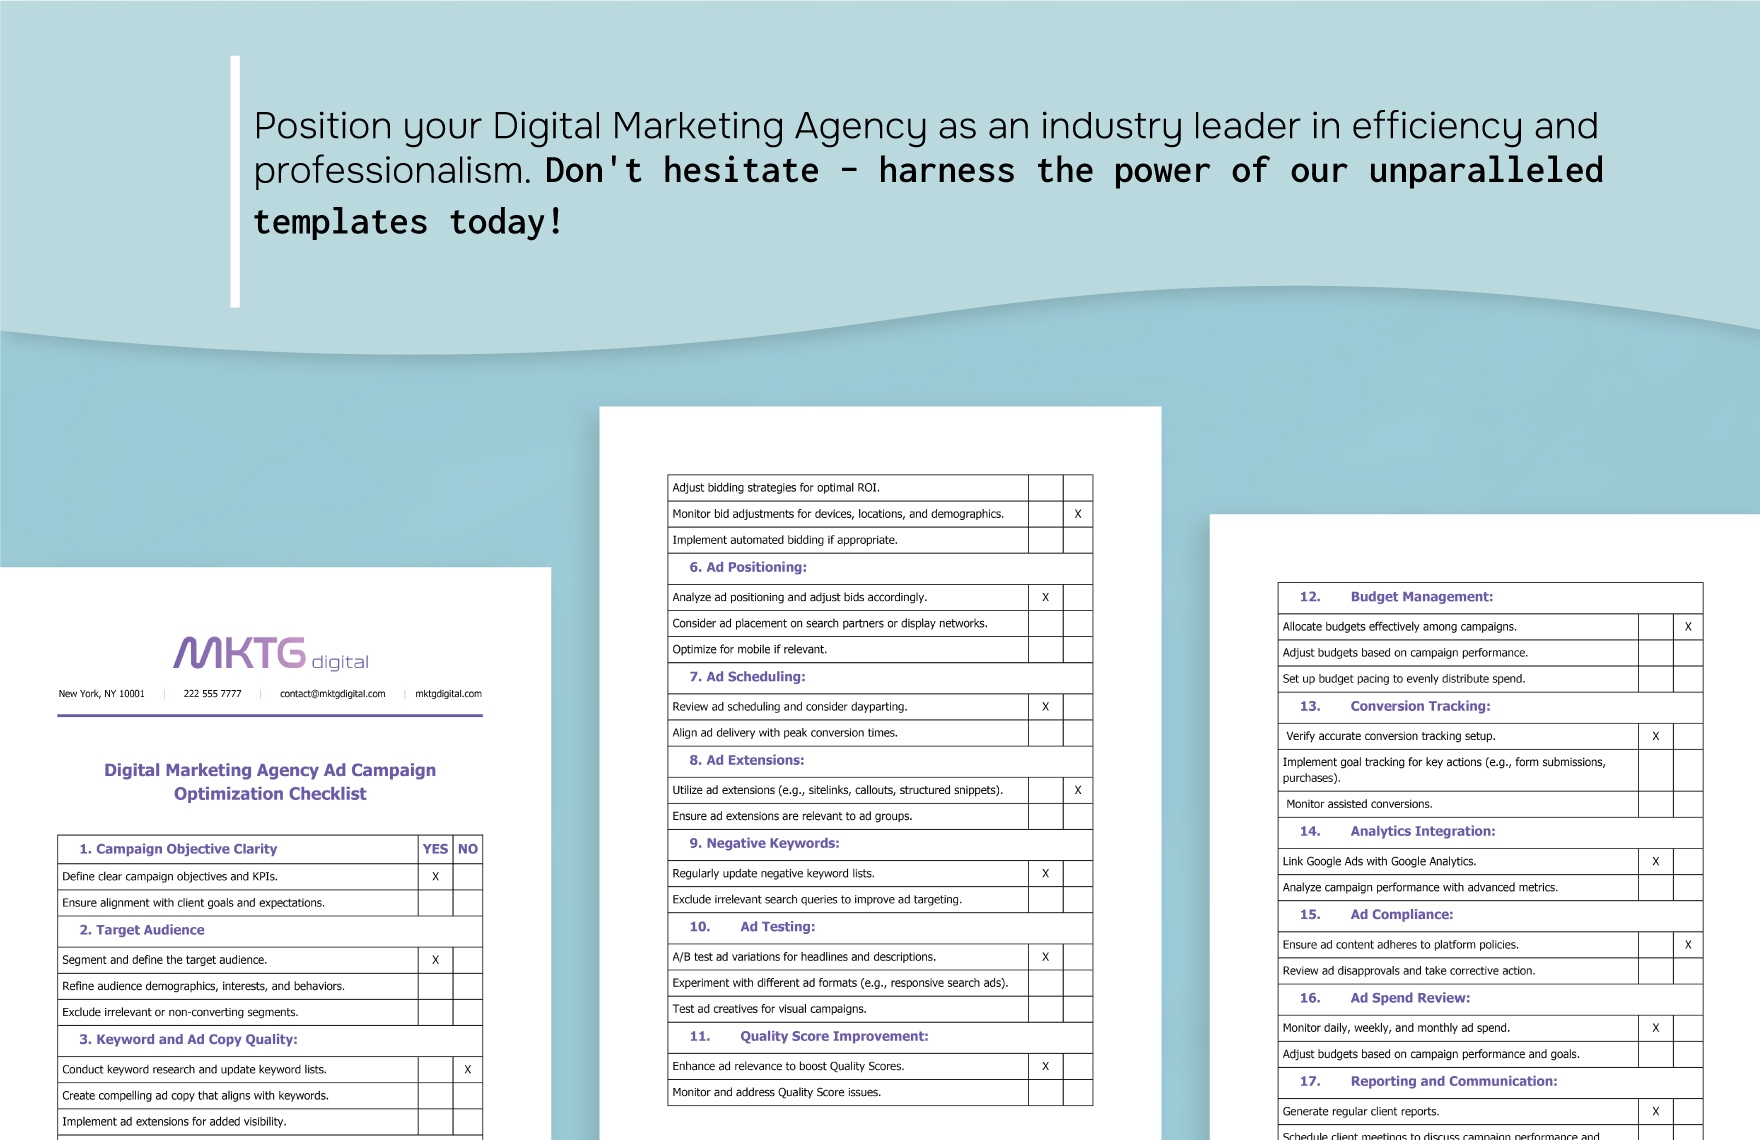 Digital Marketing Agency Ad Campaign Optimization Checklist Template